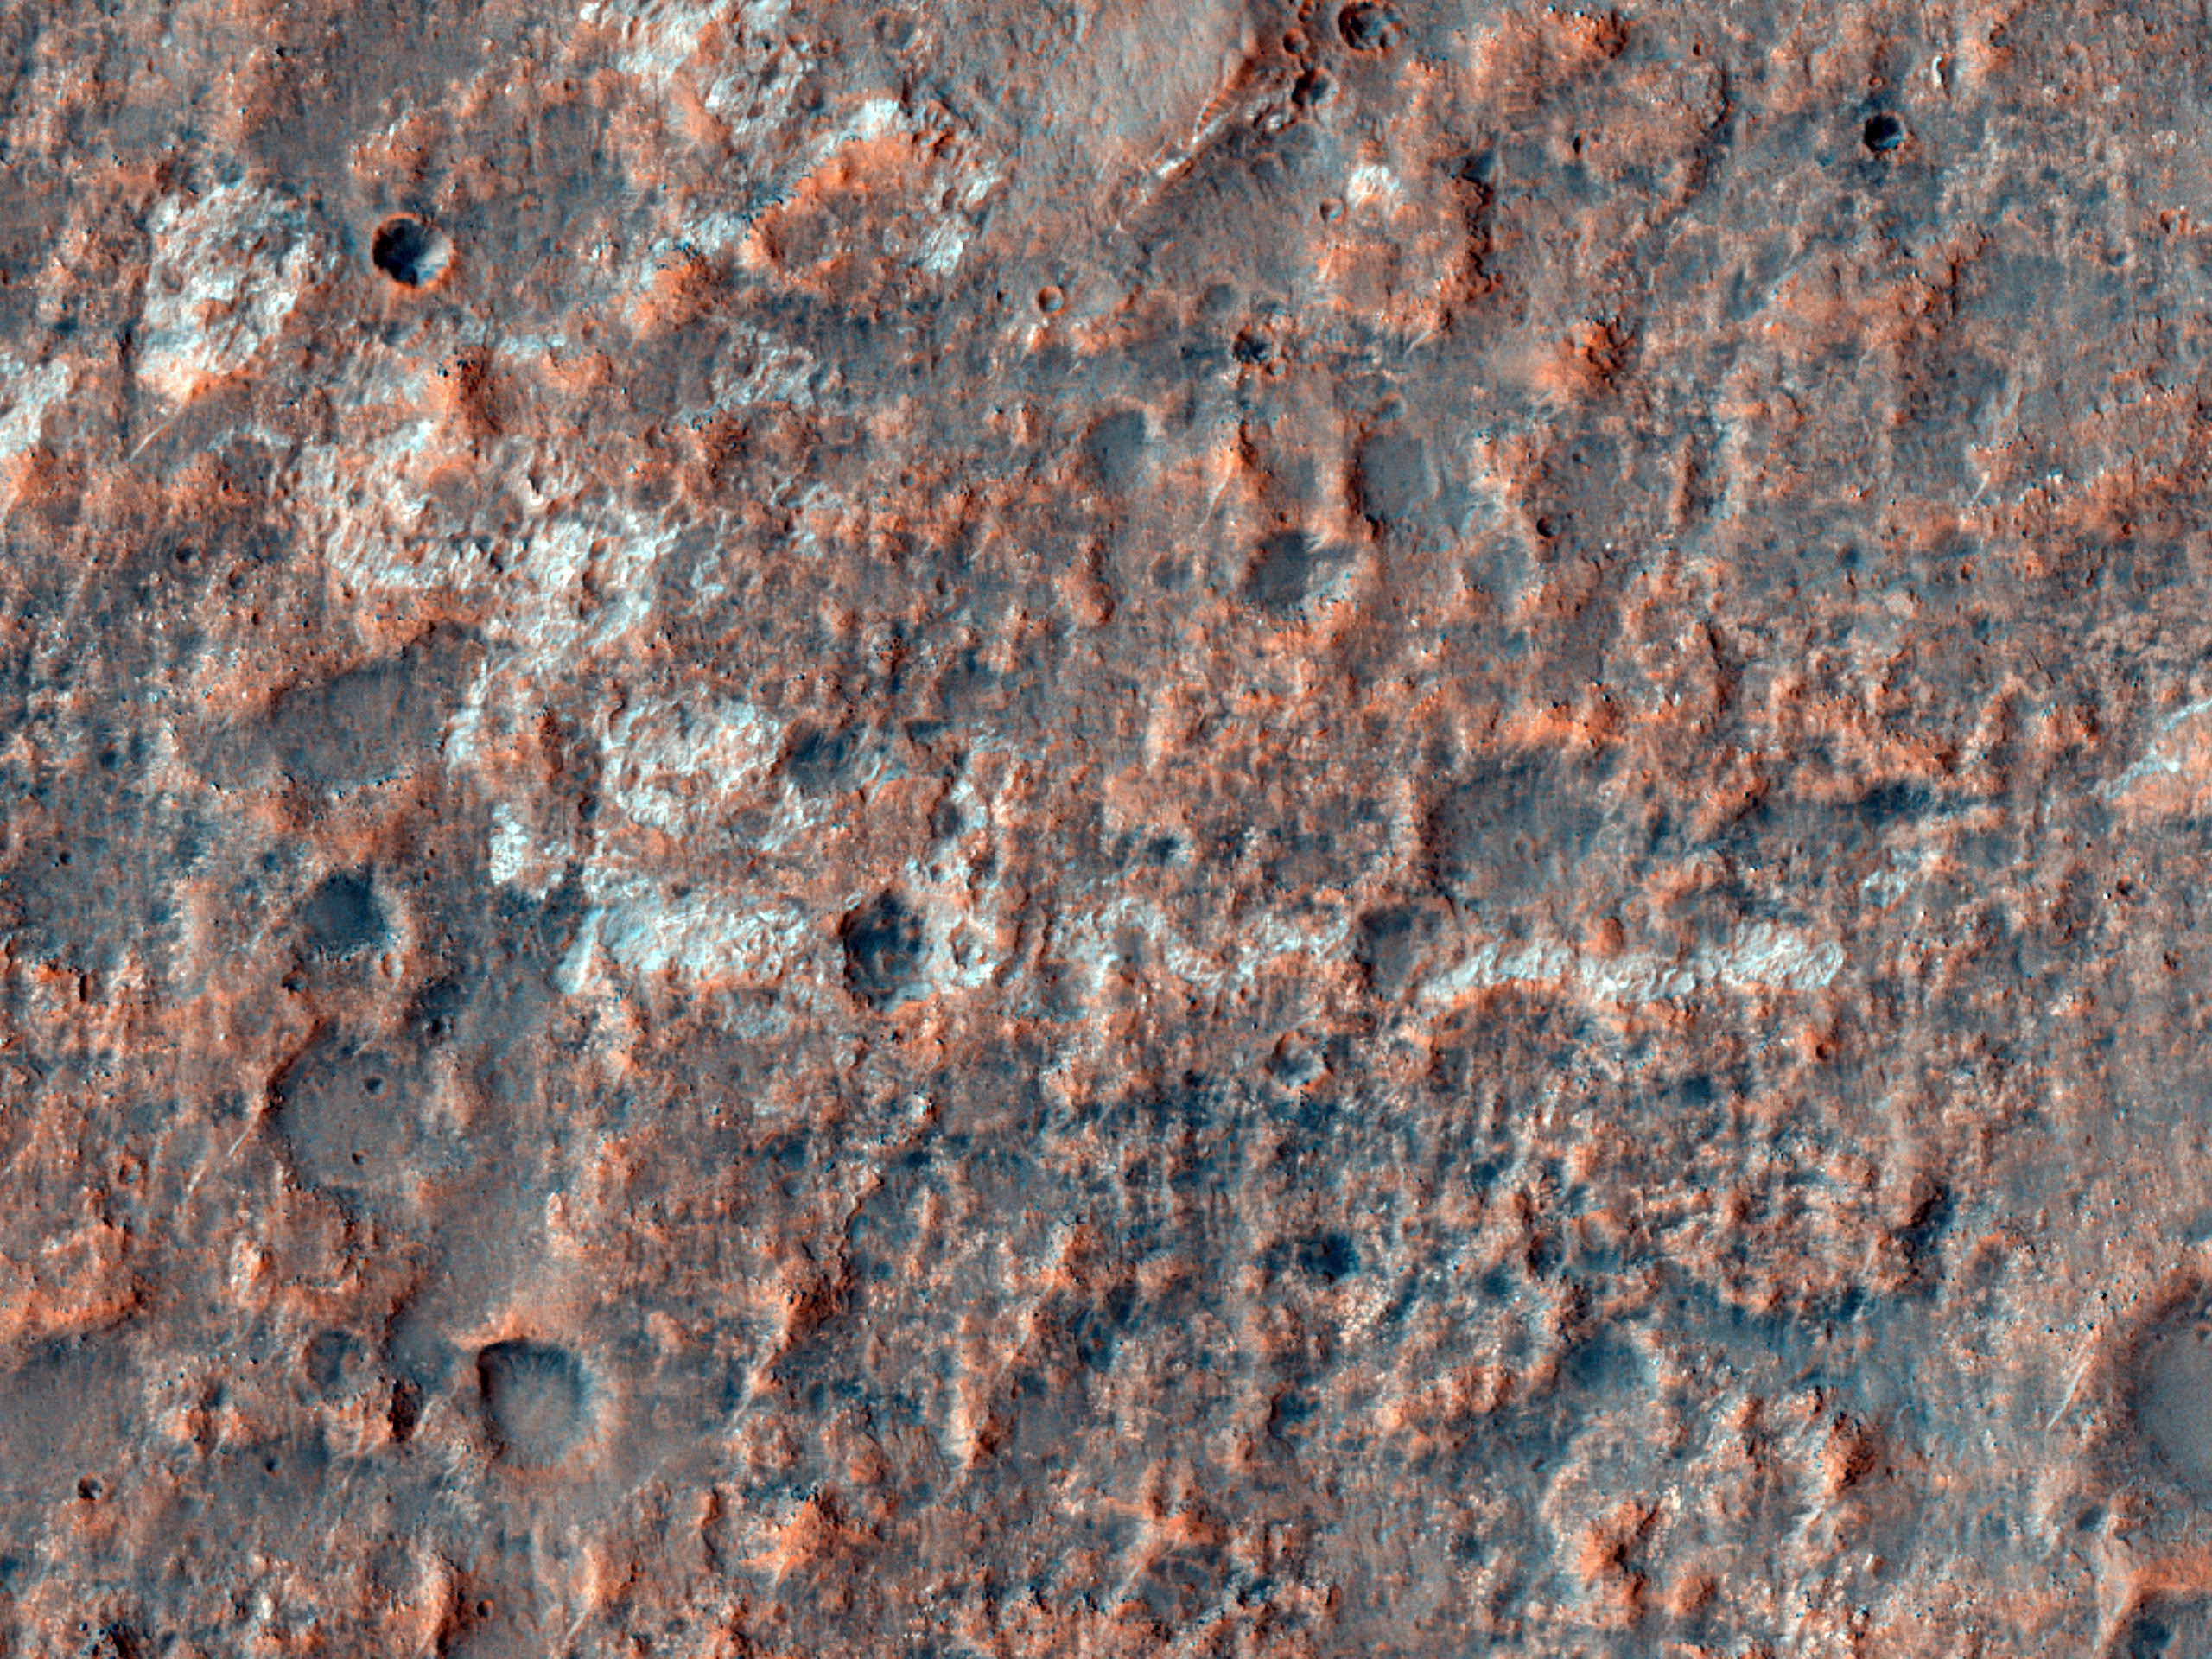 Light-Toned Landforms near the Edge of Hesperia Planum